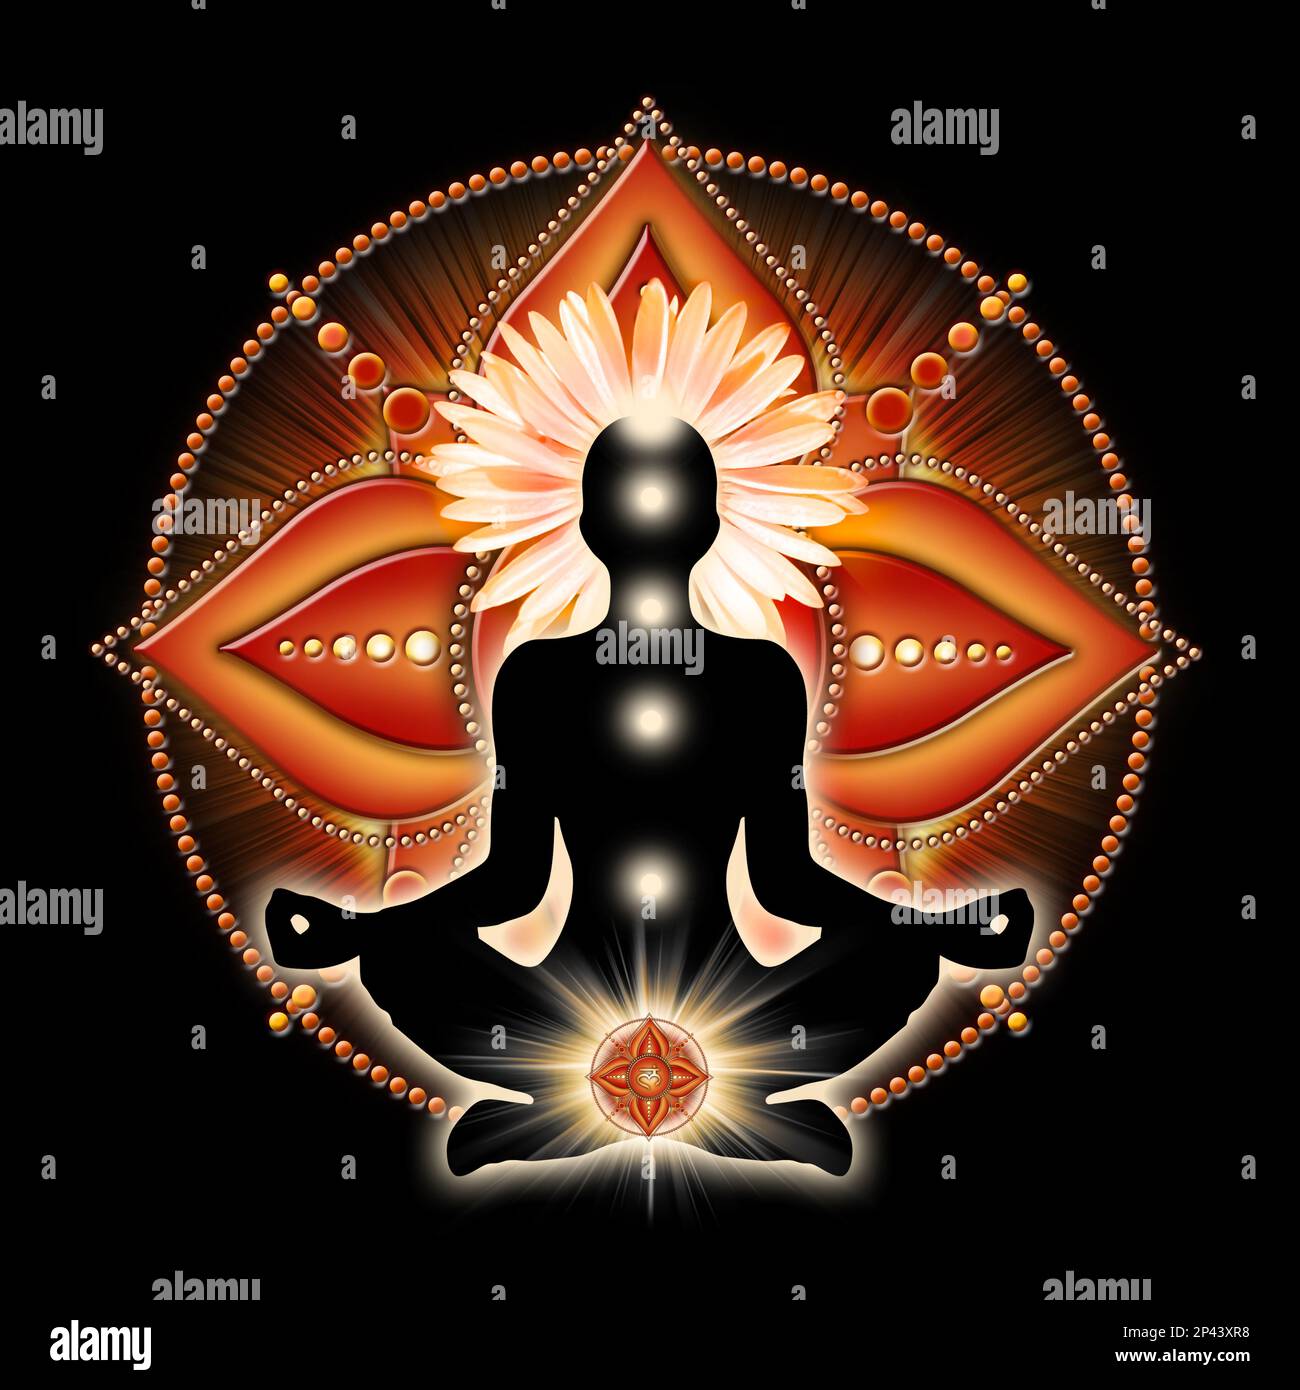 Root chakra meditation in yoga lotus pose, in front of muladhara chakra symbol and blooming gazania garden flower. Stock Photo